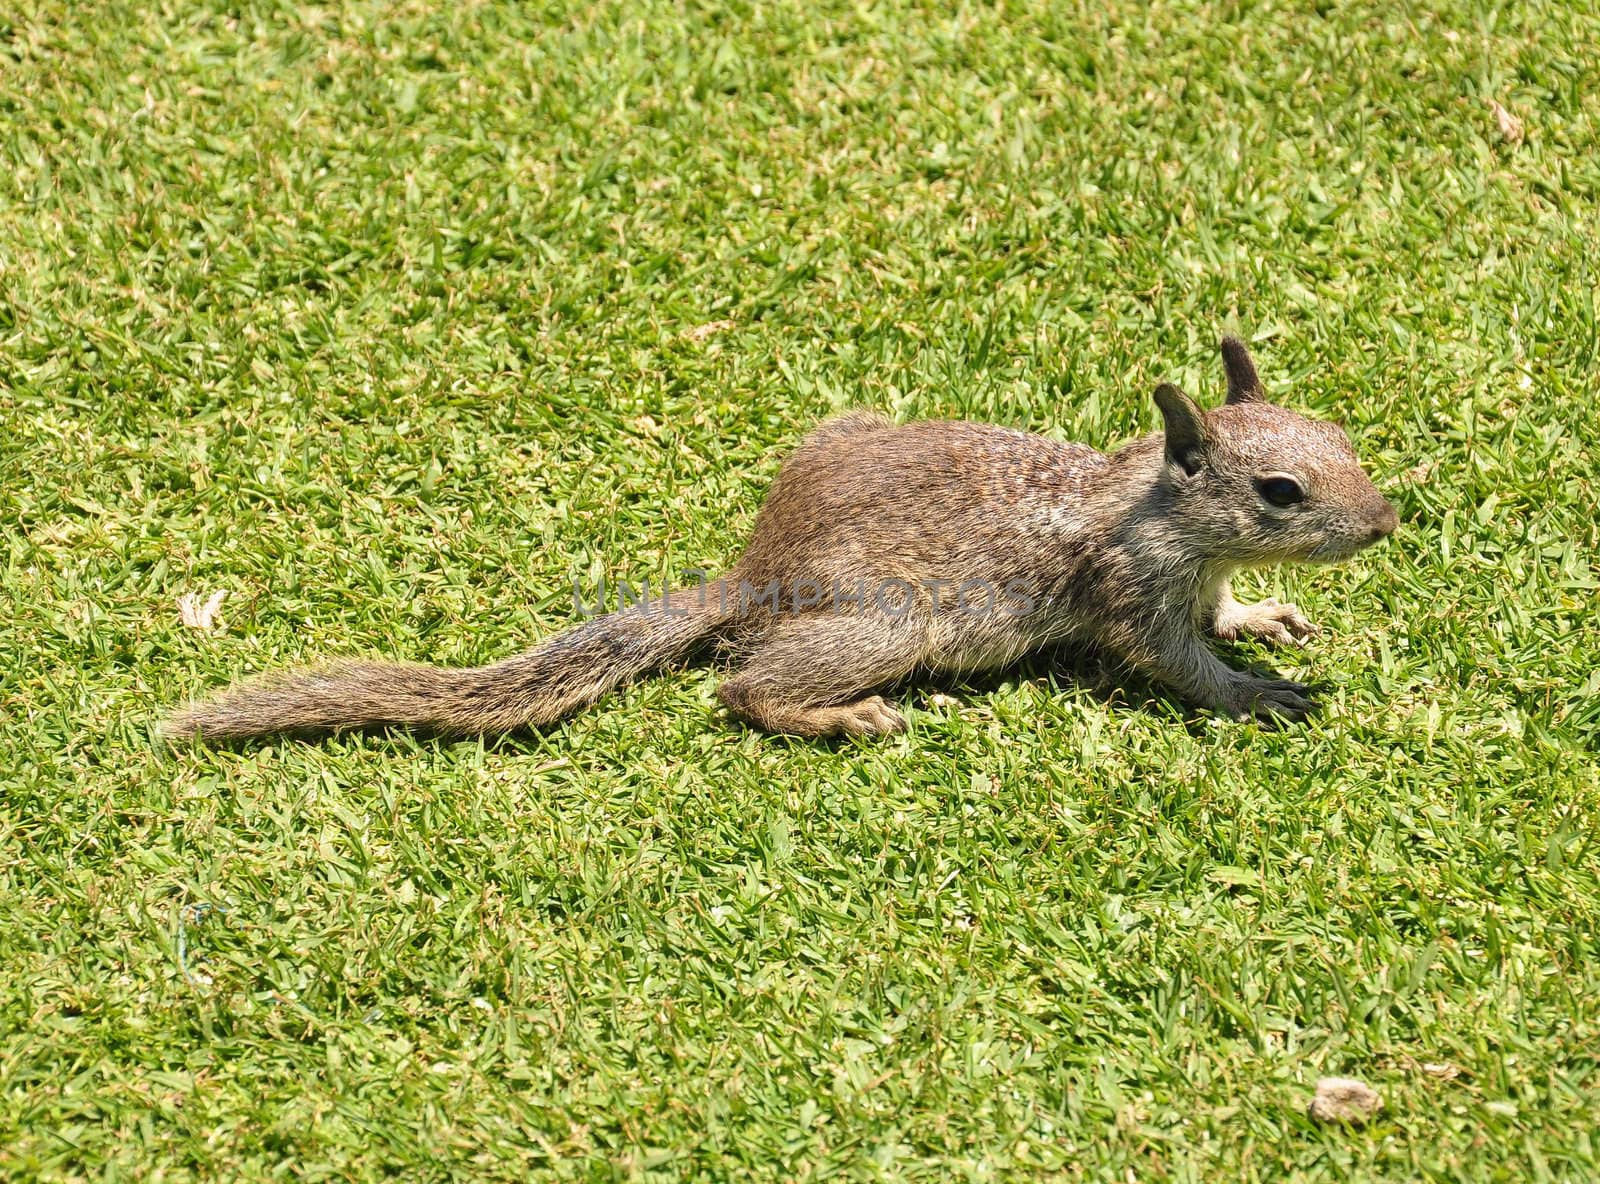 Ground squirrel by PJ1960